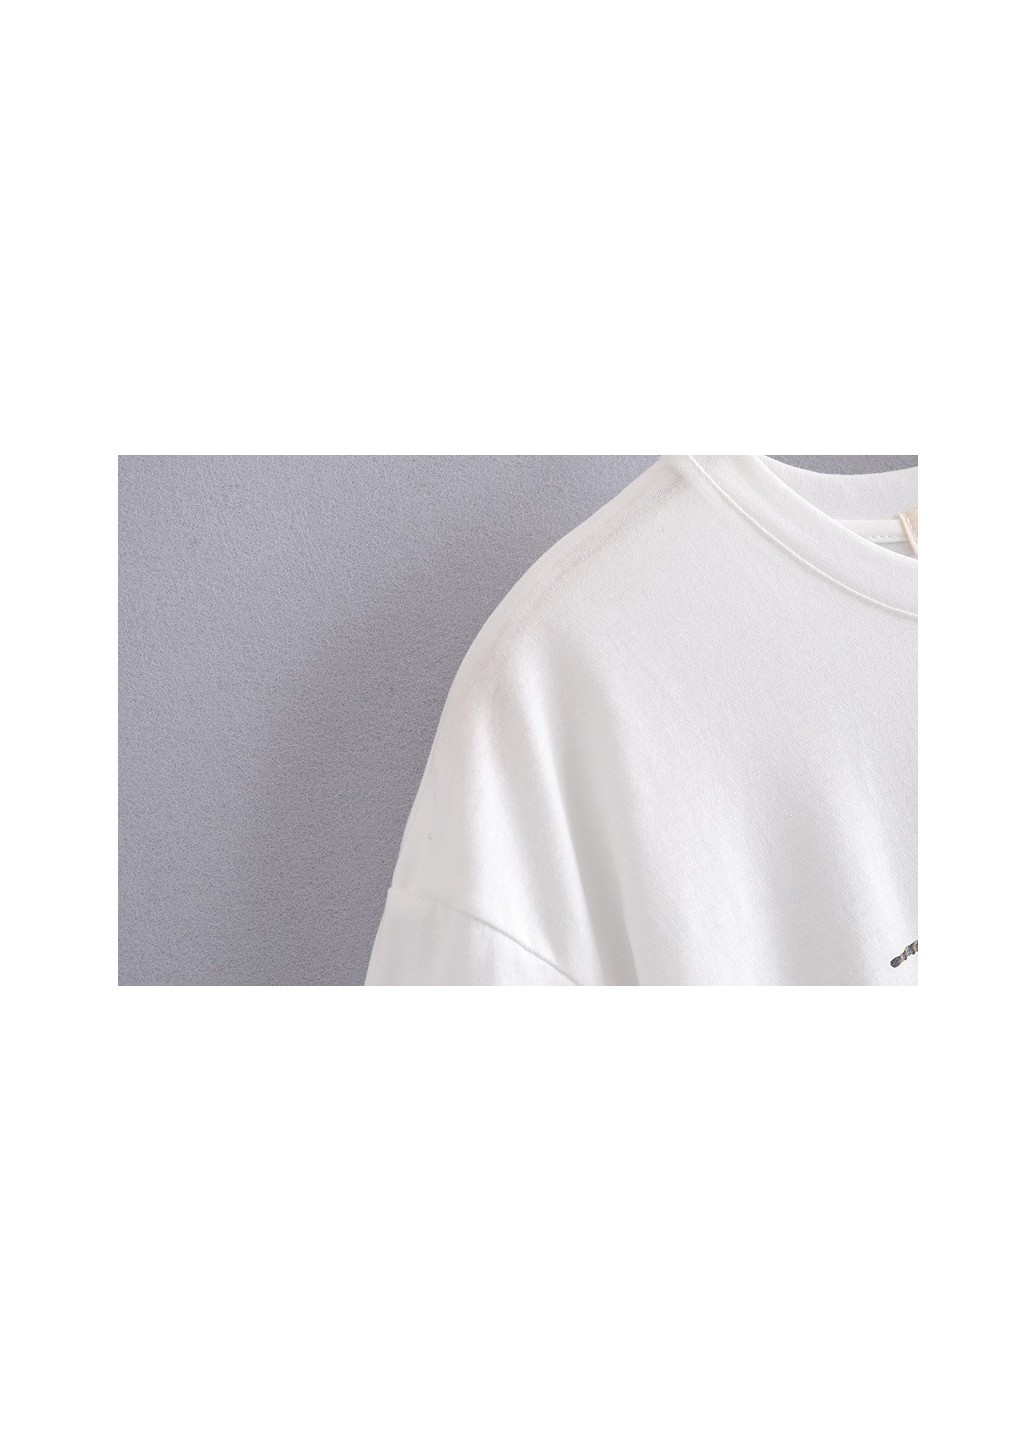 Белая летняя футболка женская tigers Berni Fashion WF-6404